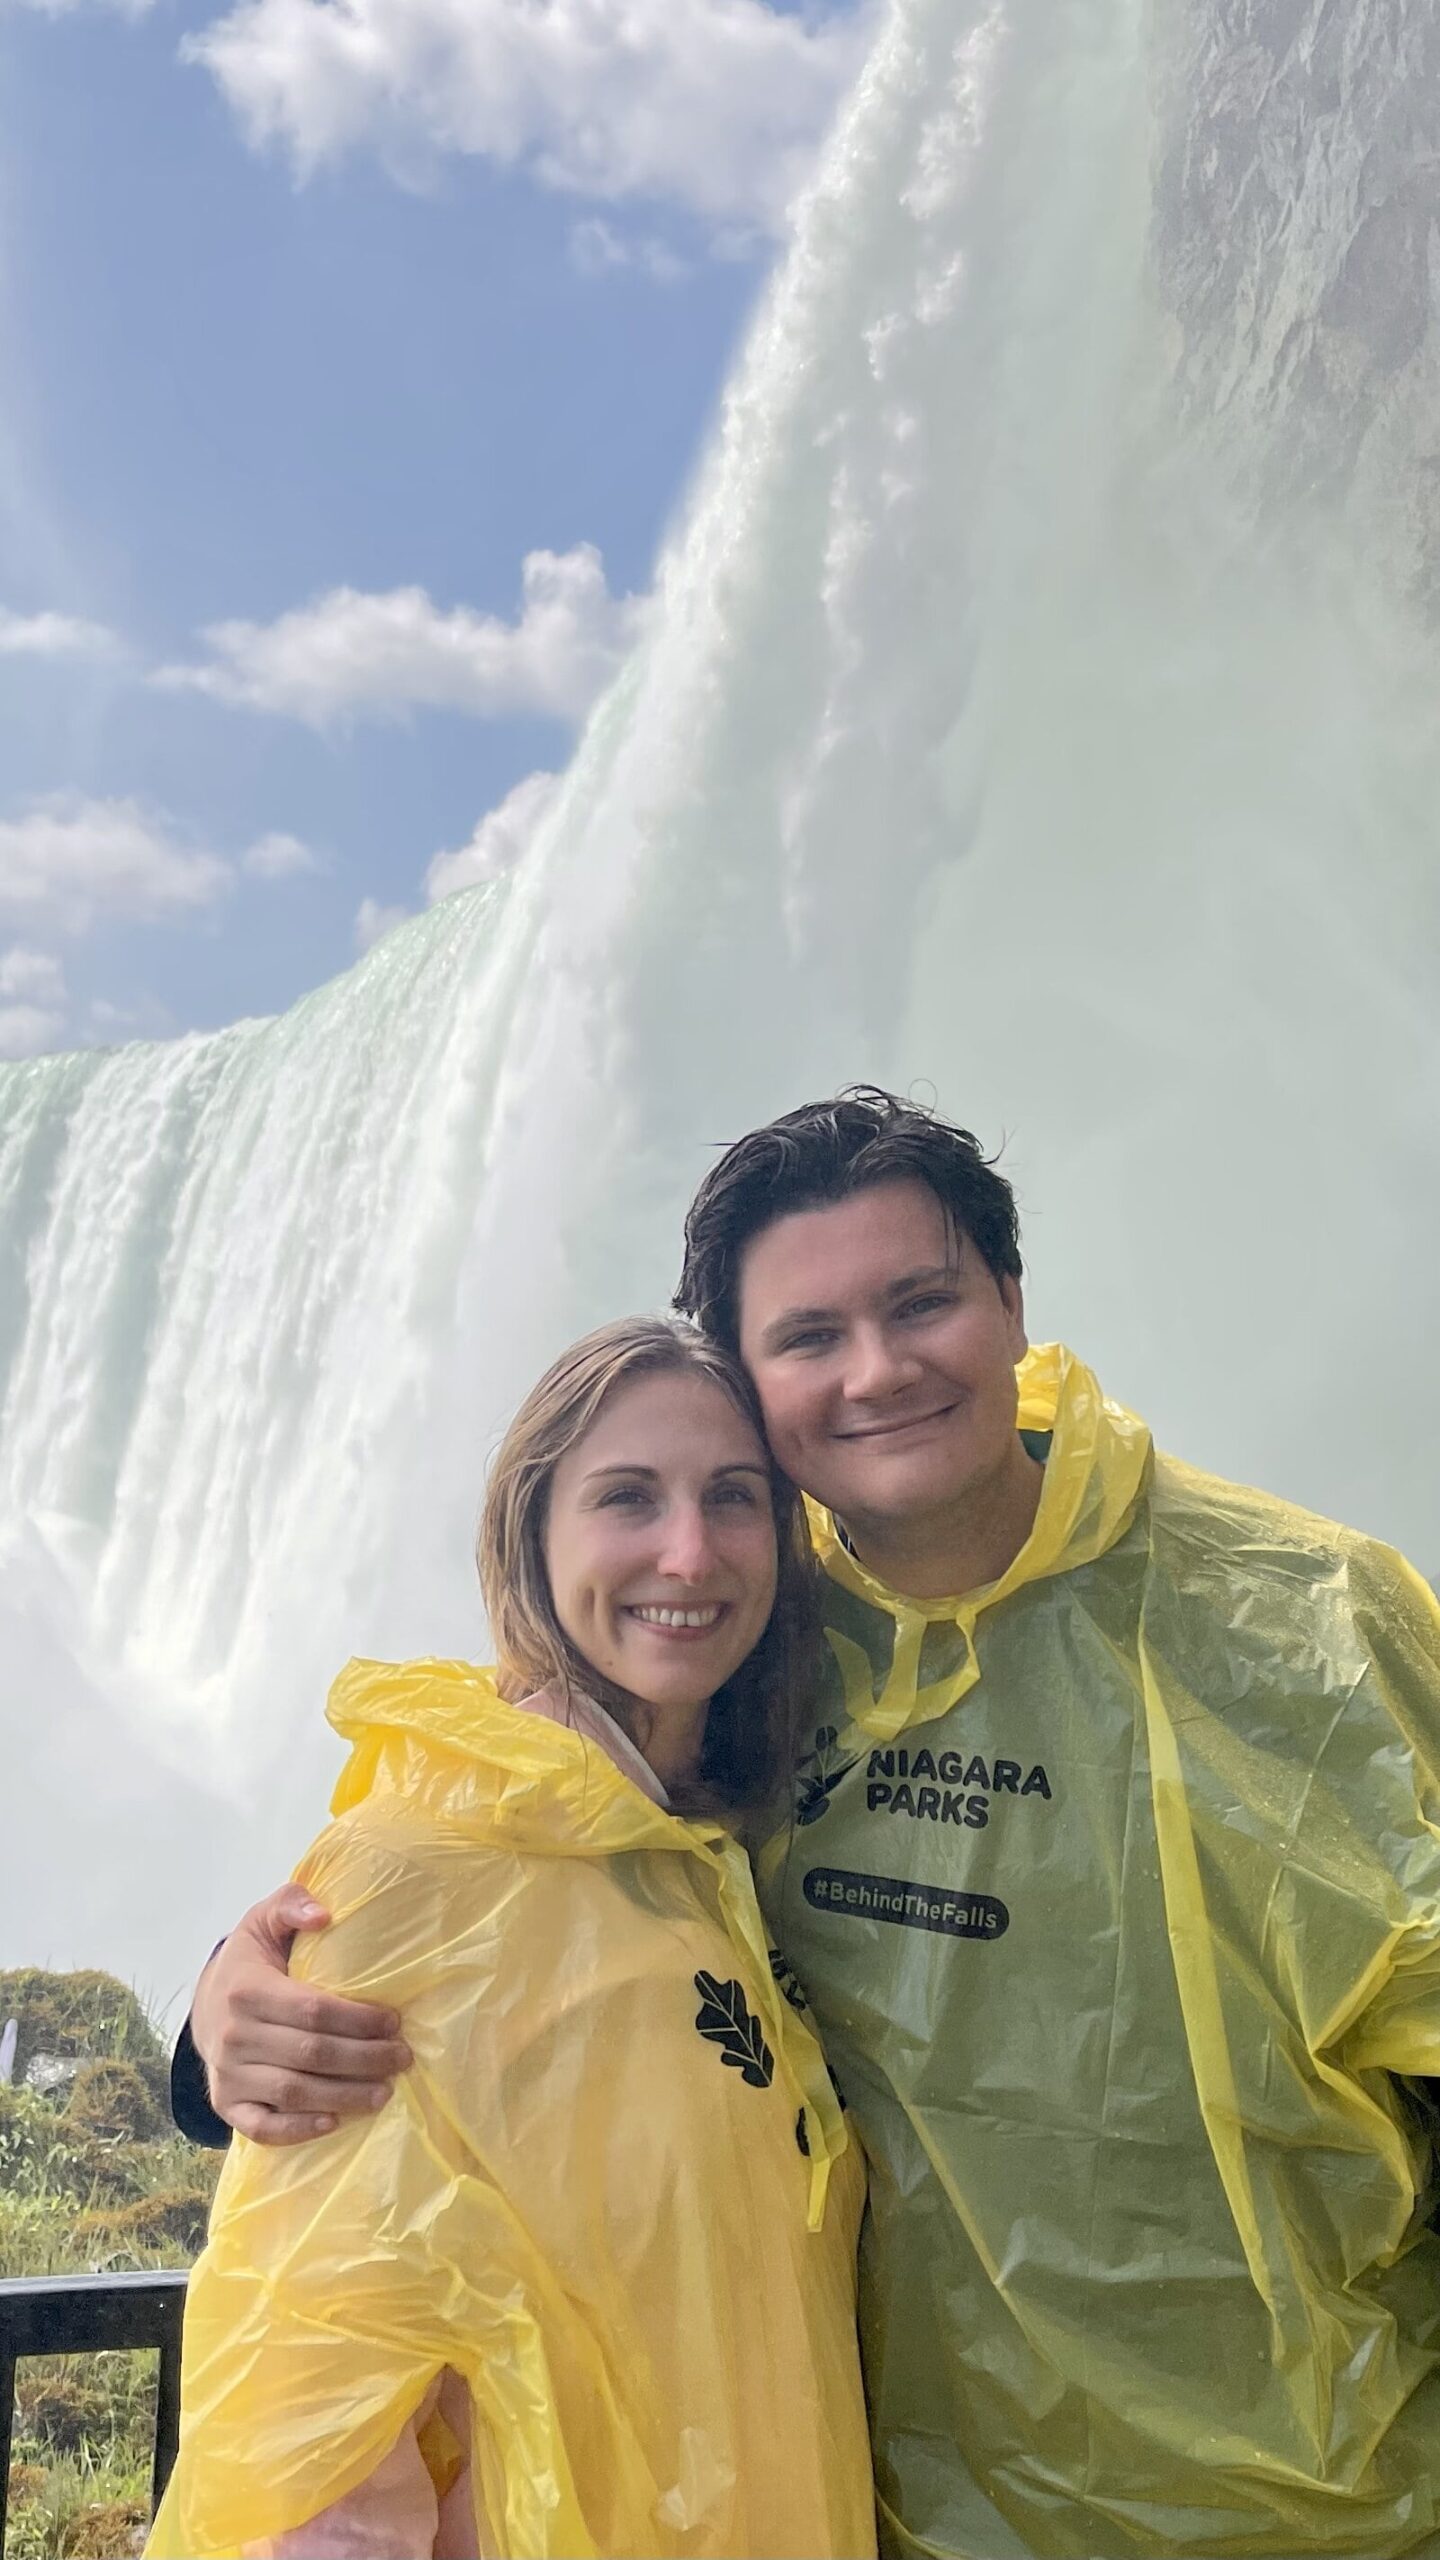 Astrid & Christian at the Niagara Falls, Canada | Ode2style.com